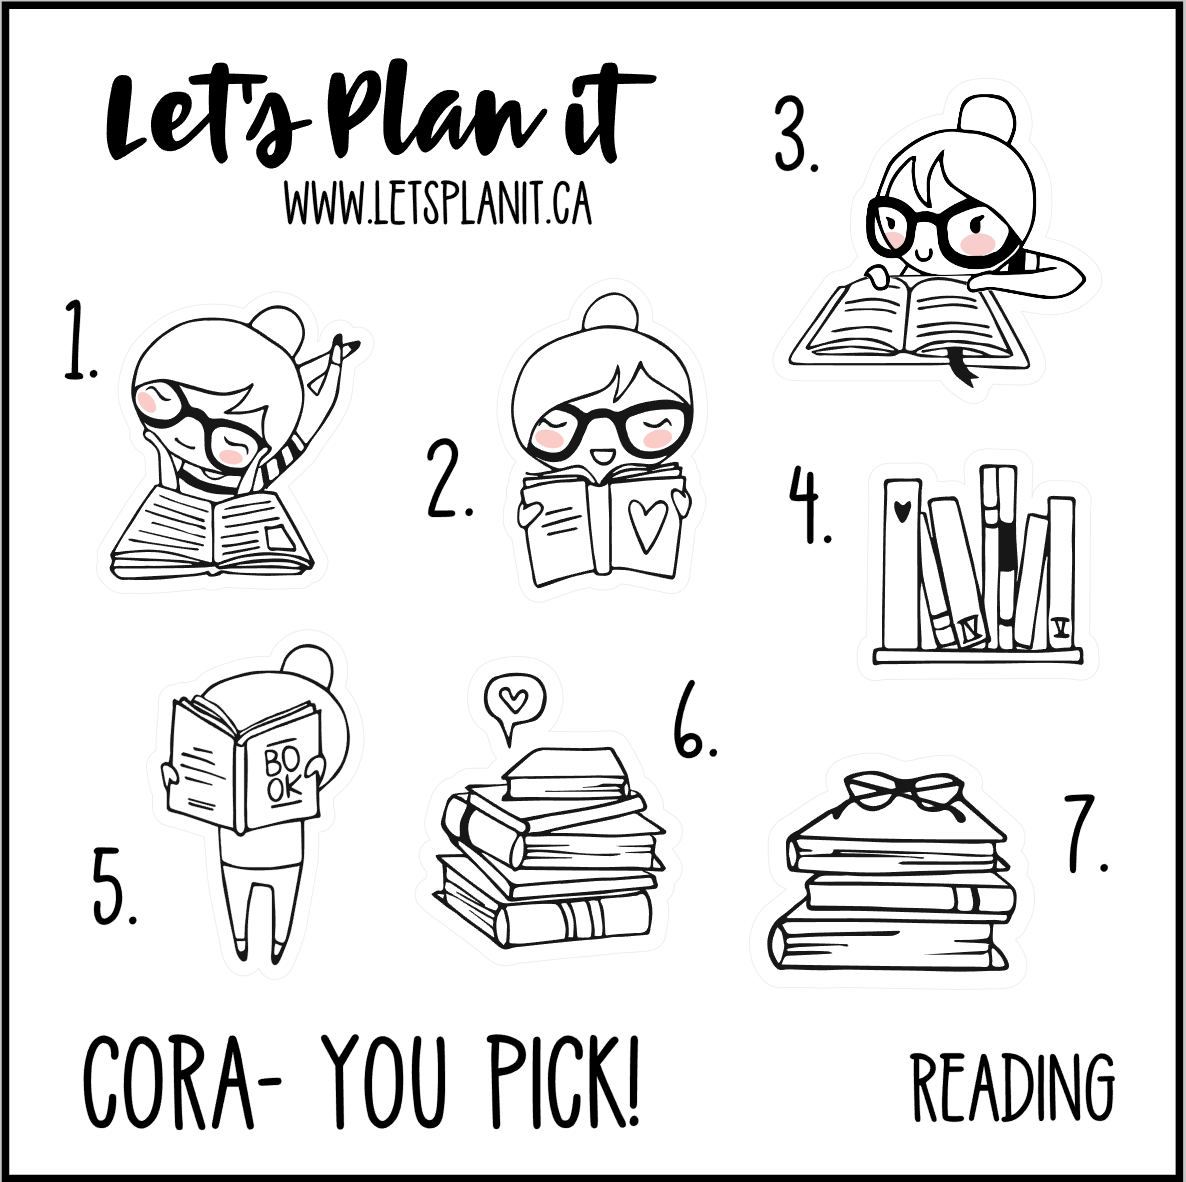 Cora-u-pick- Reading